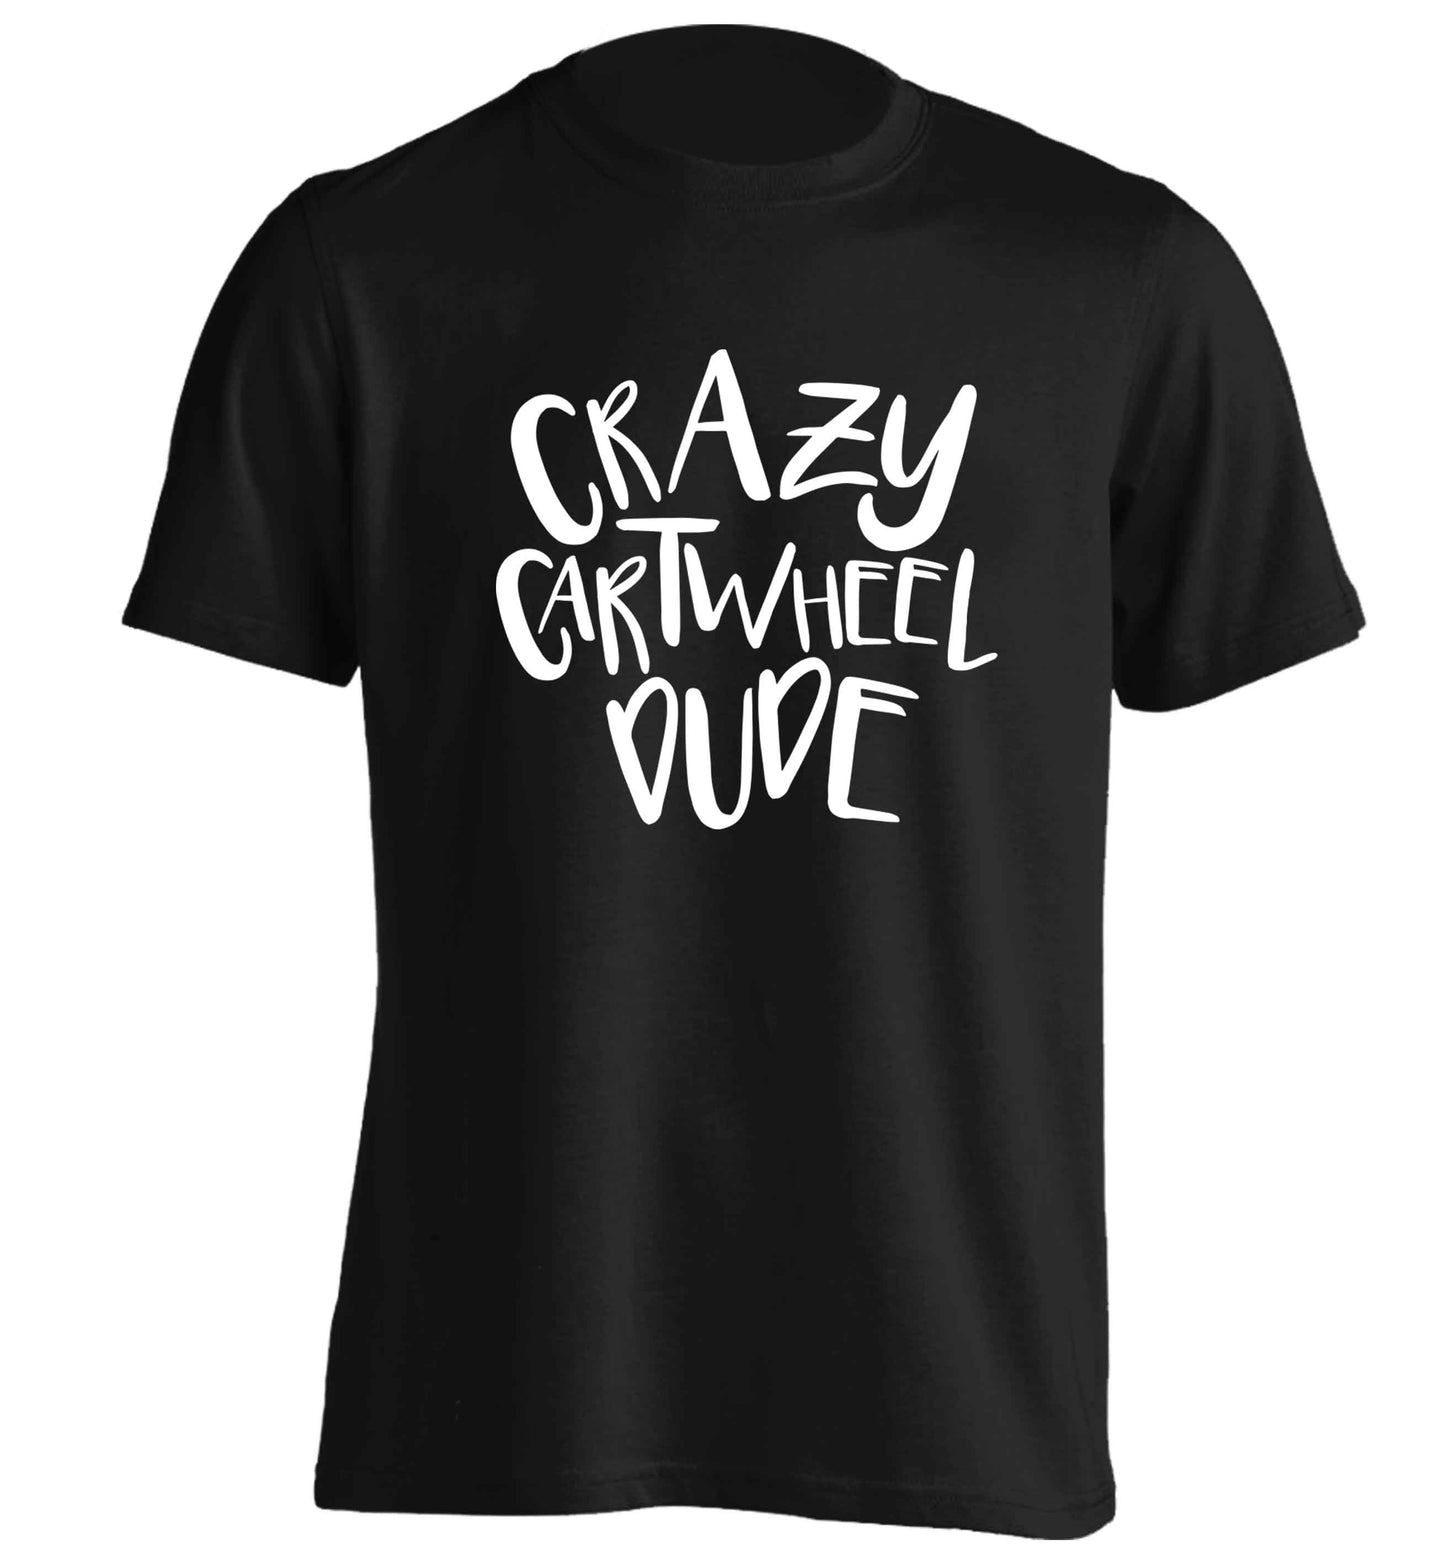 Crazy cartwheel dude adults unisex black Tshirt 2XL